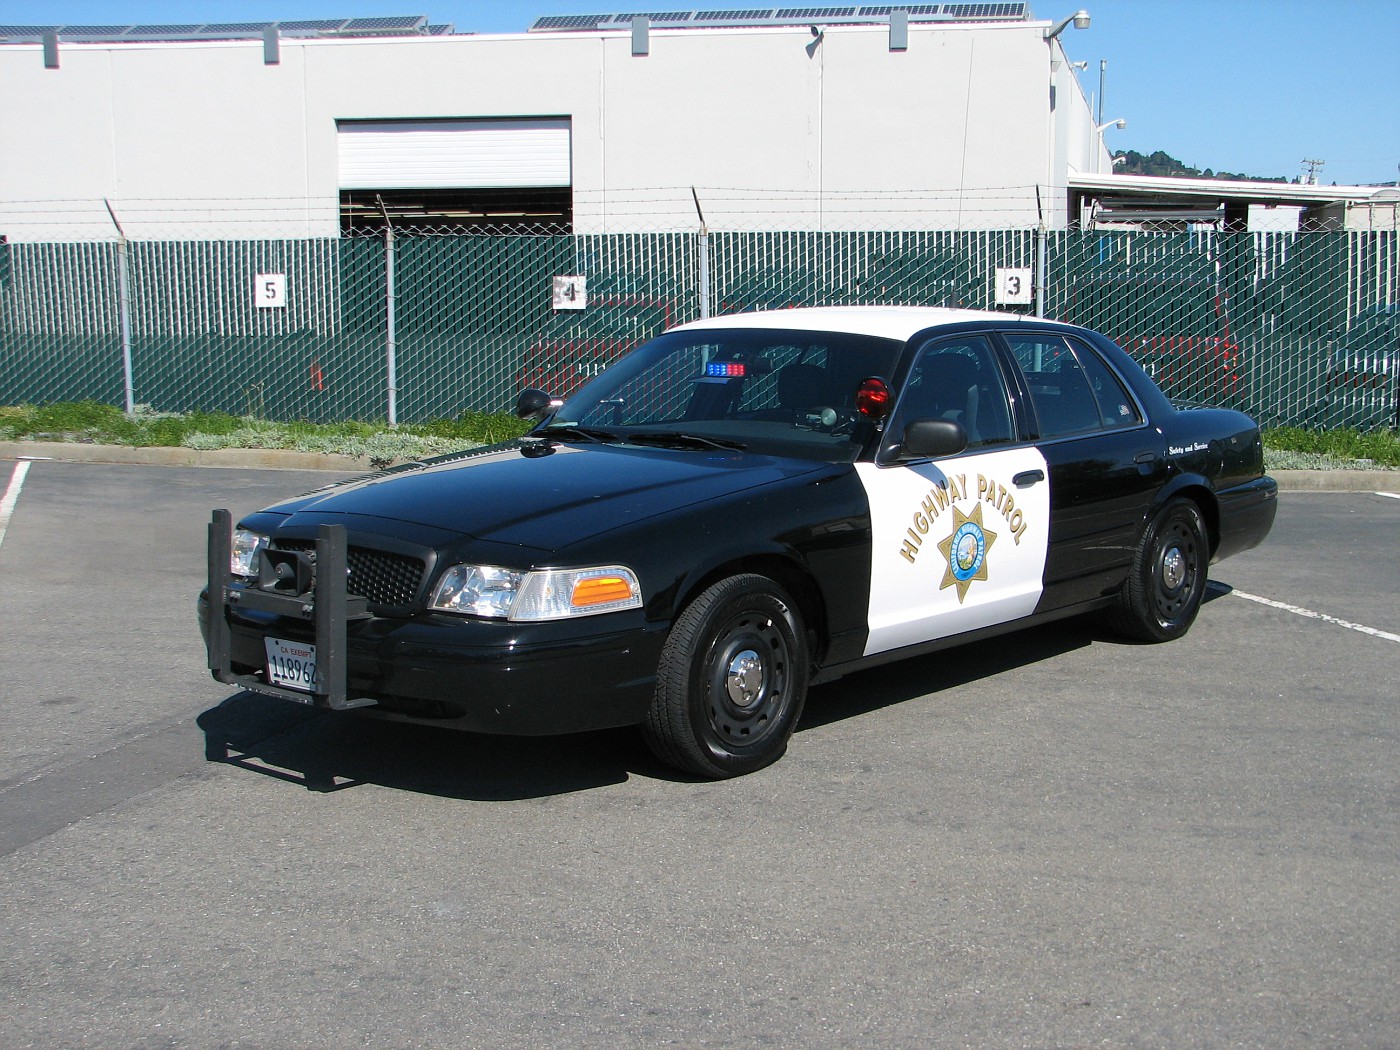 CA California Highway Patrol